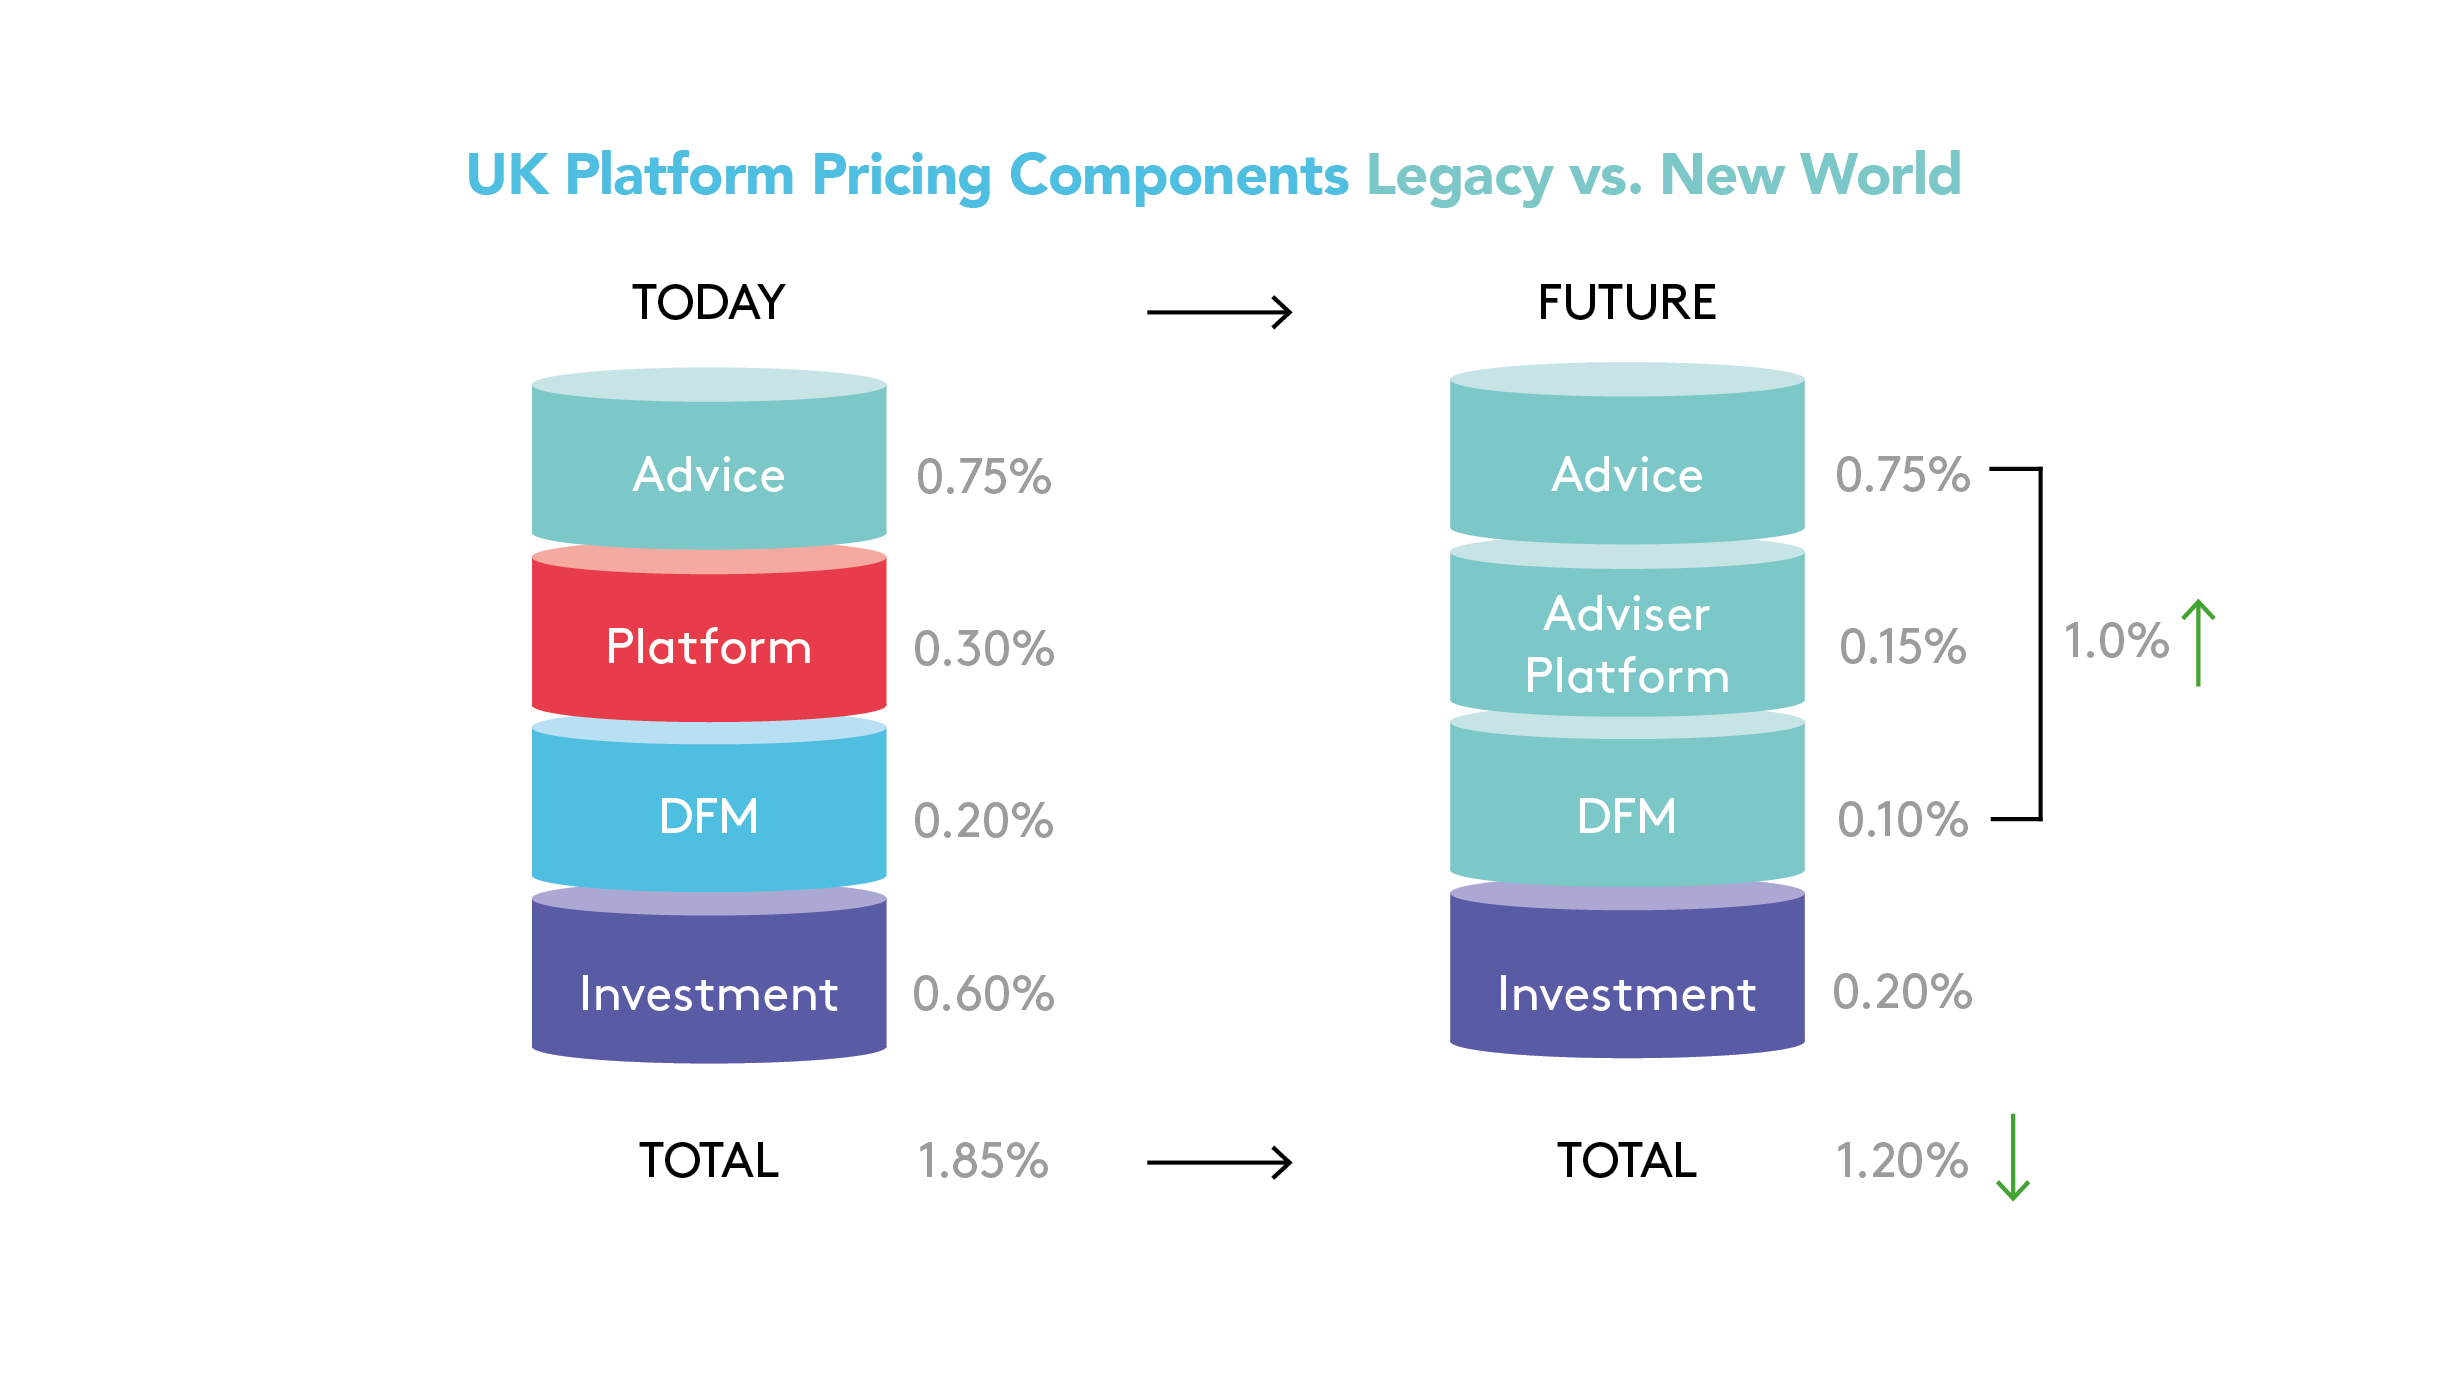 UK platform pricing components, legacy vs new world